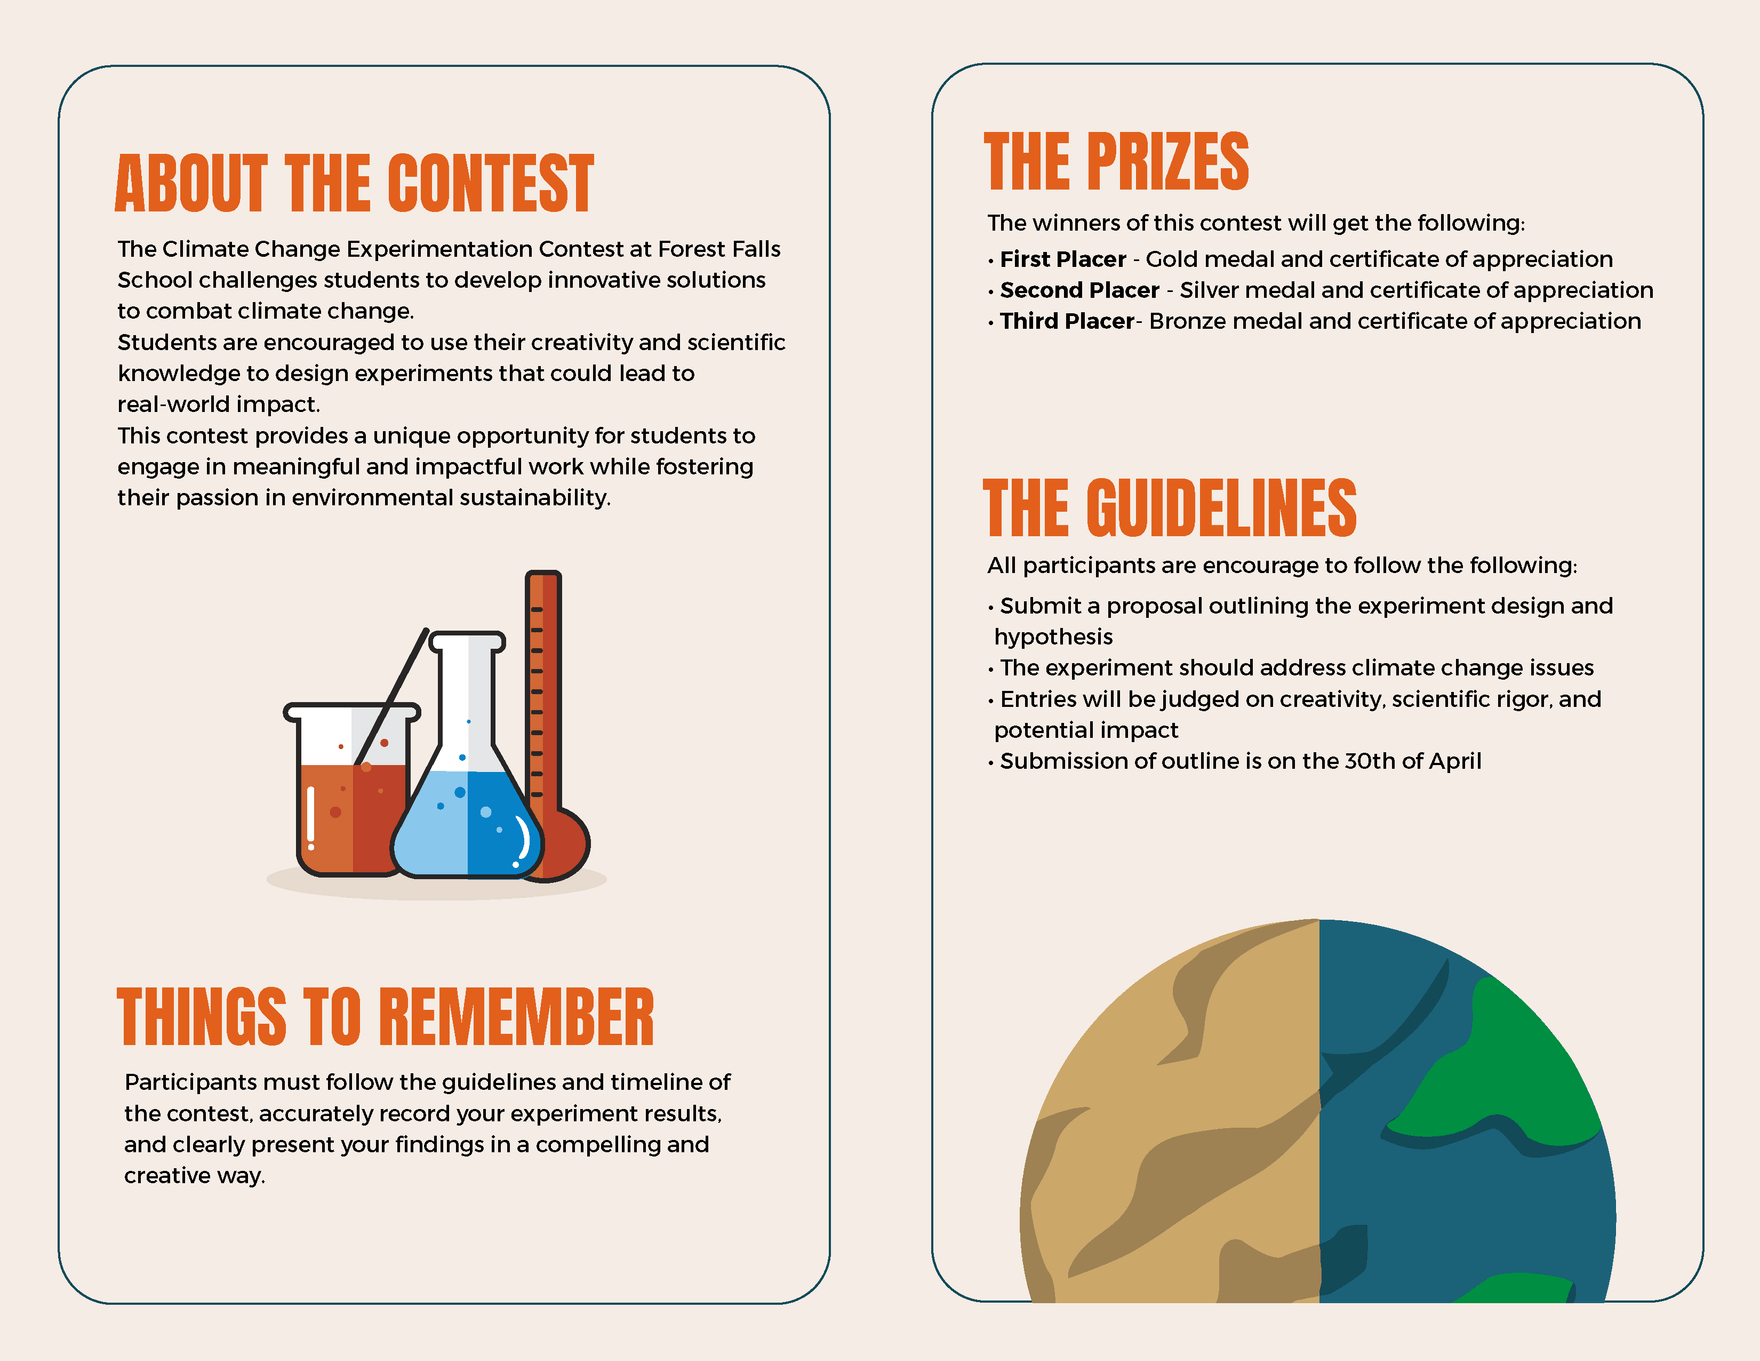 Climate Change Brochure